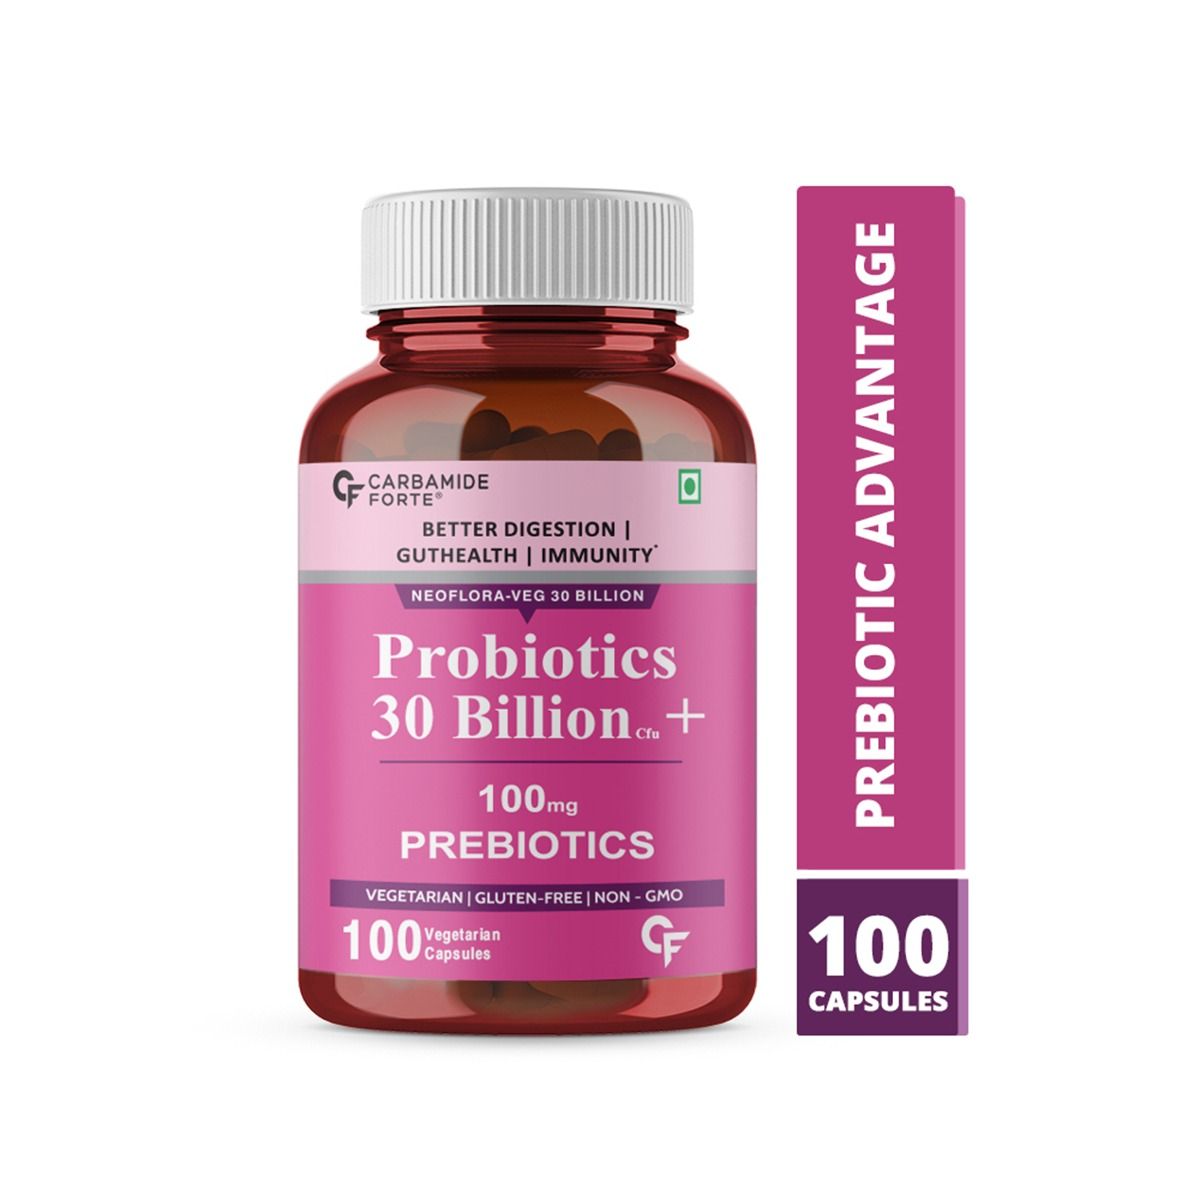 Buy Carbamide Forte Probiotics 30 Billion + 100mg Prebiotics Vegetarian Capsules, 100 Count Online